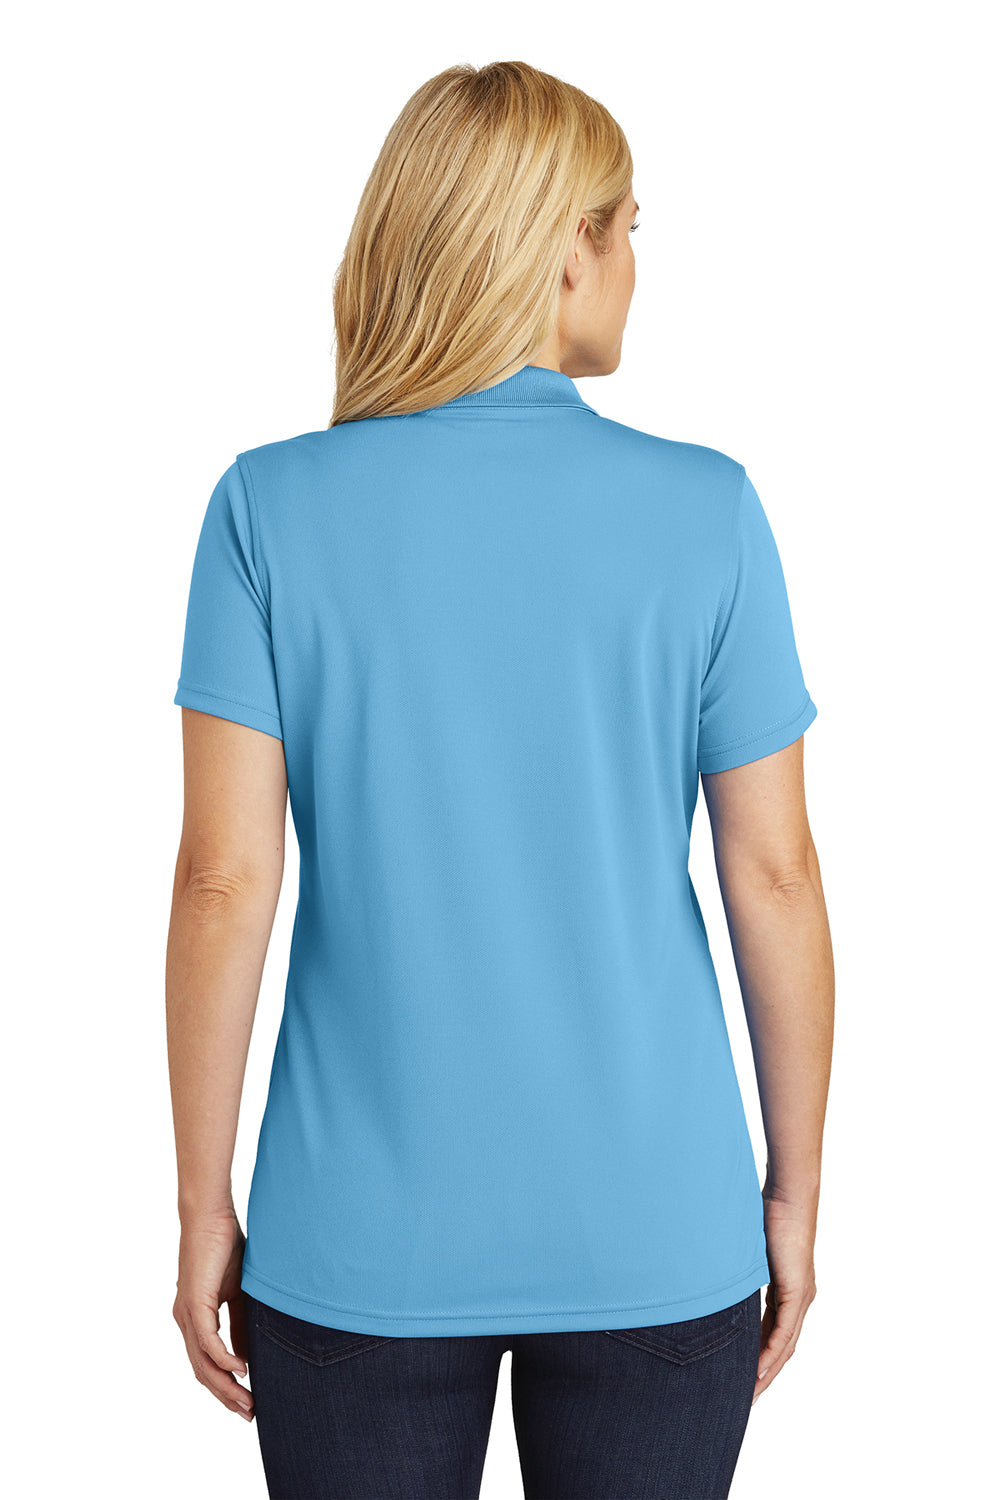 Port Authority LK110 Womens Dry Zone Moisture Wicking Short Sleeve Polo Shirt Carolina Blue Back